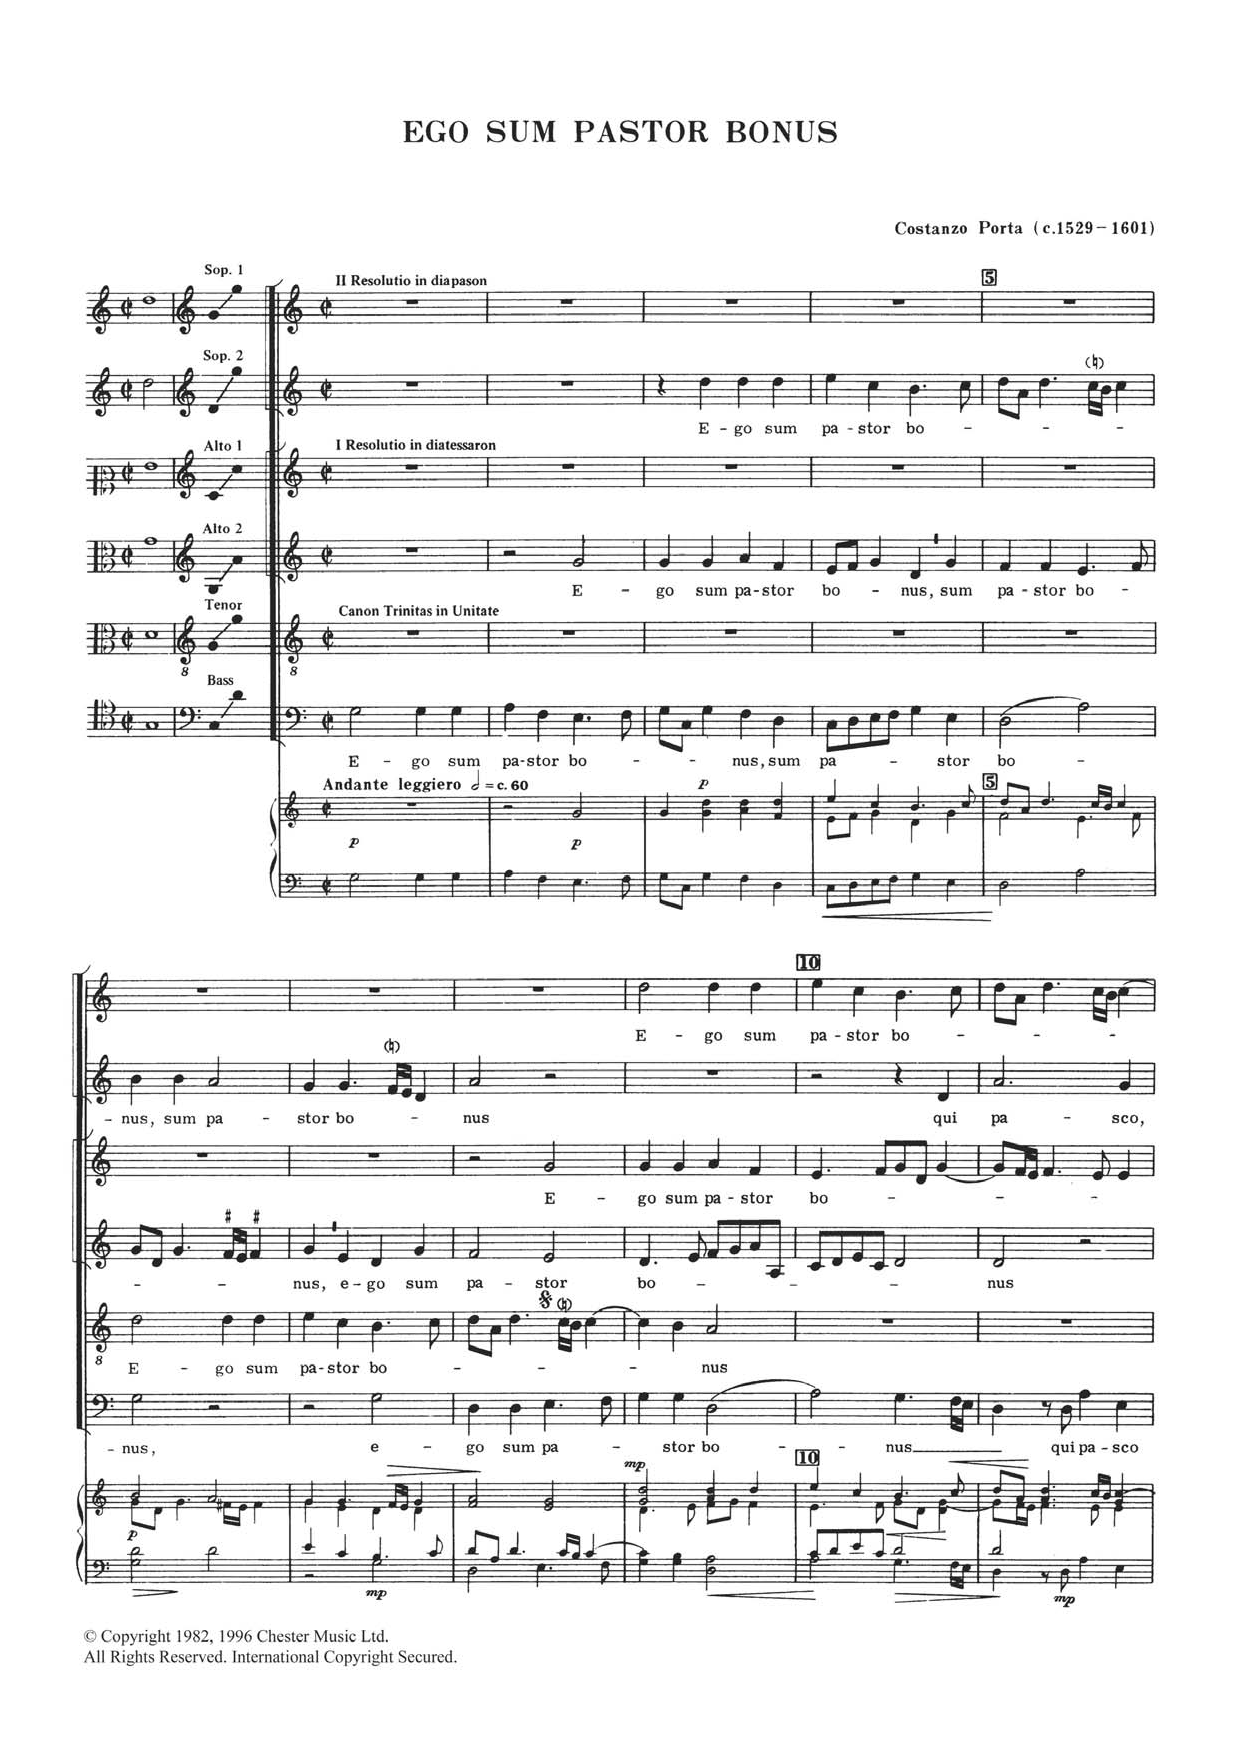 Costanzo Porta Ego Sum Pastor Bonus sheet music notes and chords arranged for SATB Choir